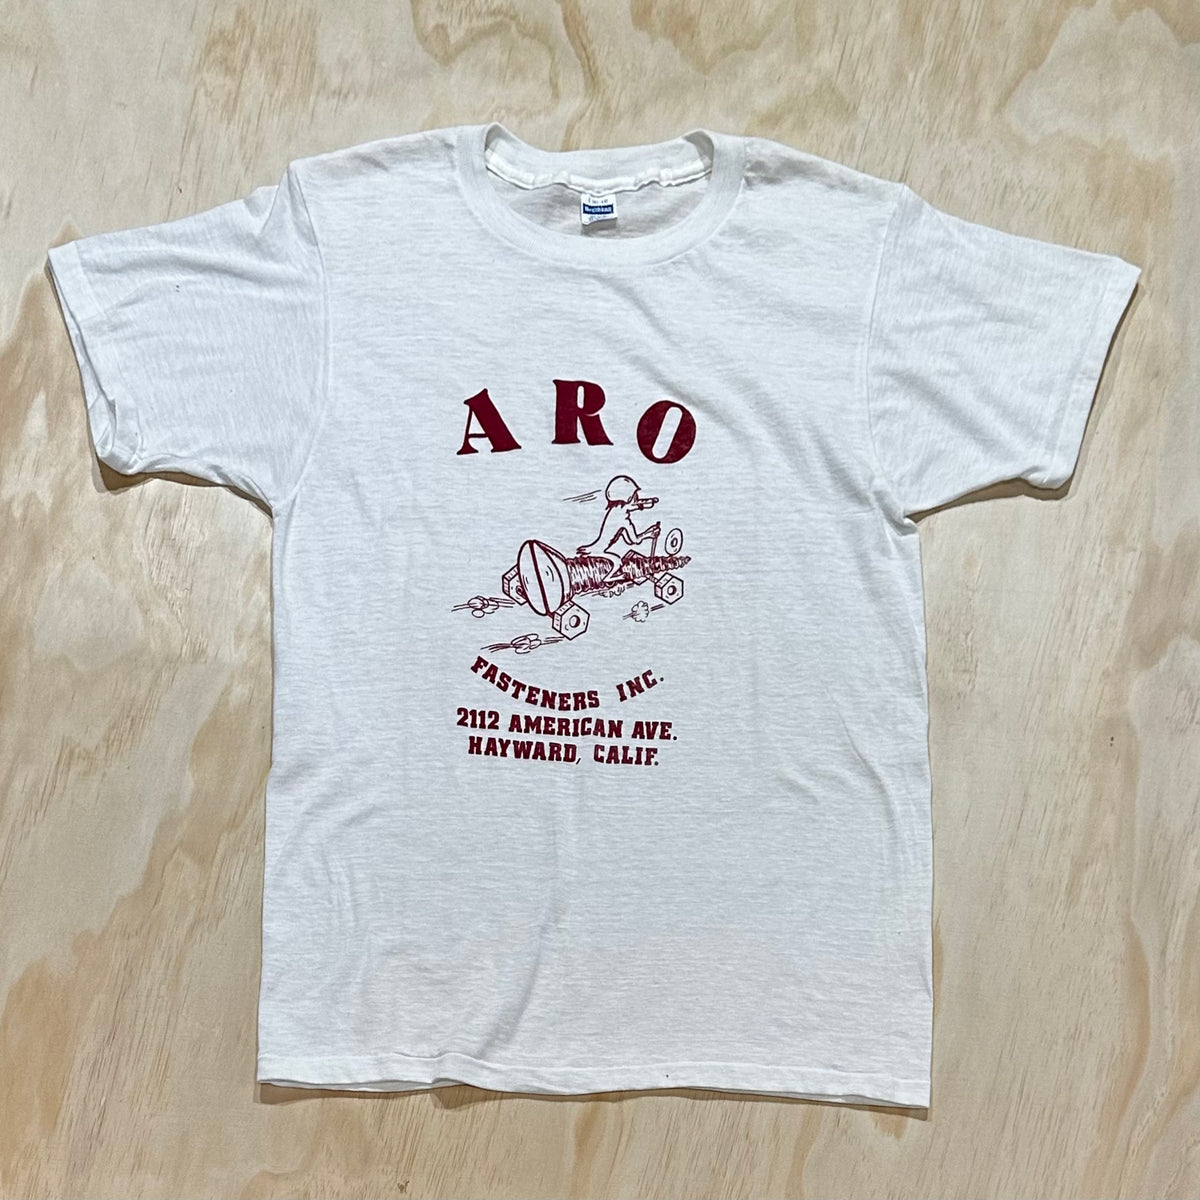 Vintage 70s ARO Fasteners Inc. t-shirt